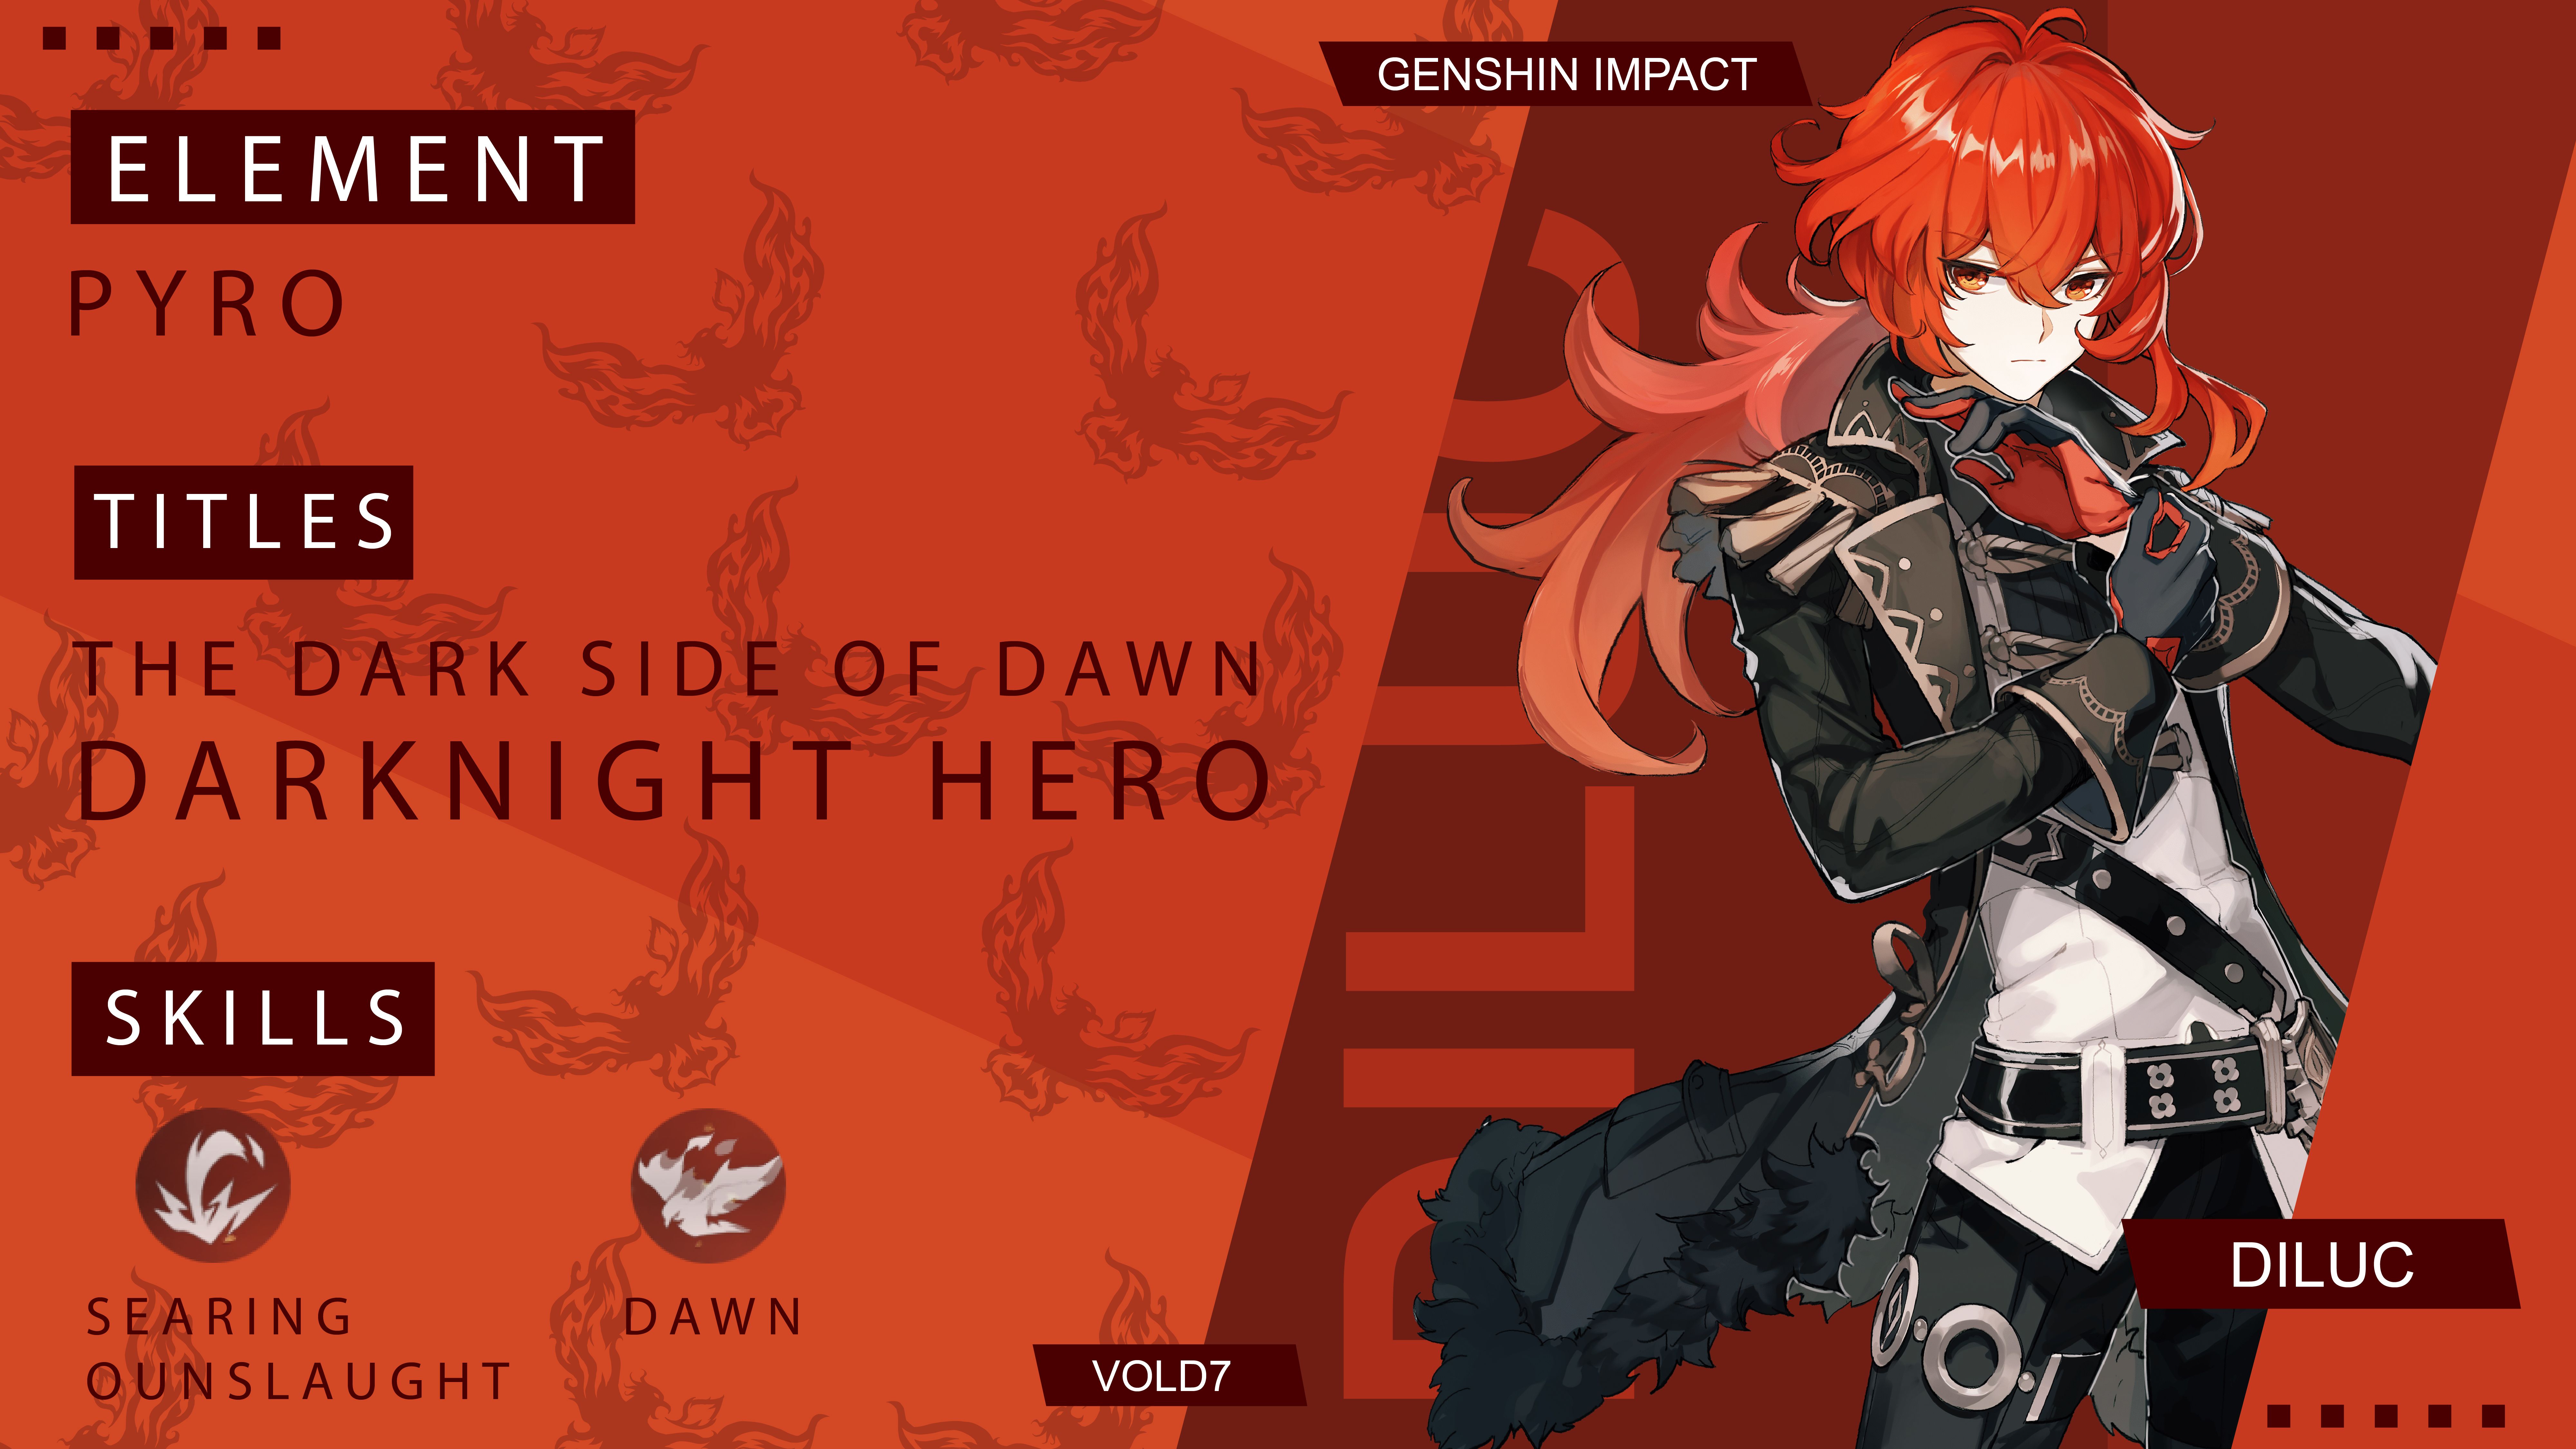 Genshin Impact Diluc Wallpaper PC. Impact, Desktop wallpaper art, Anime warrior